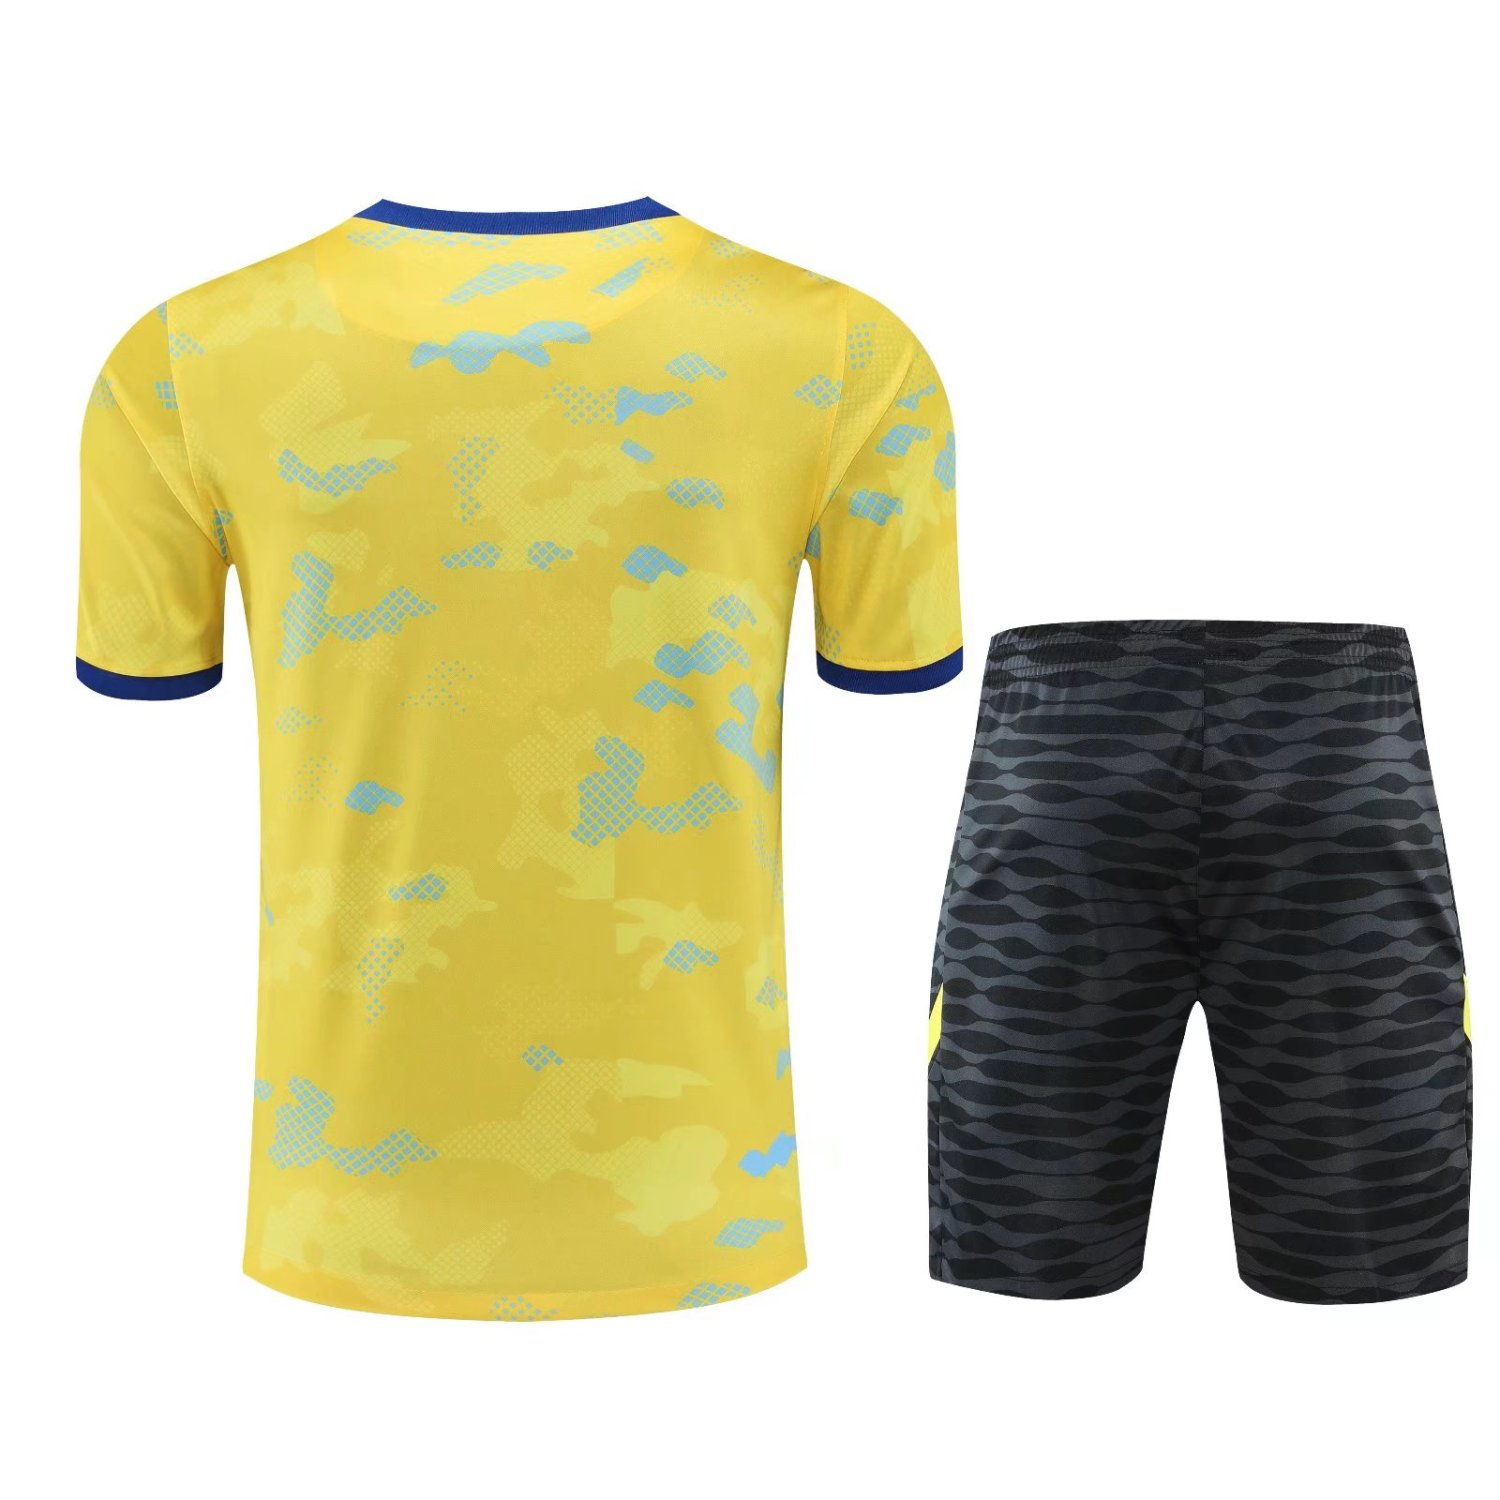 22-23 Chelsea Yellow Short Soccer Football Training Kit ( Top + Short ) Man